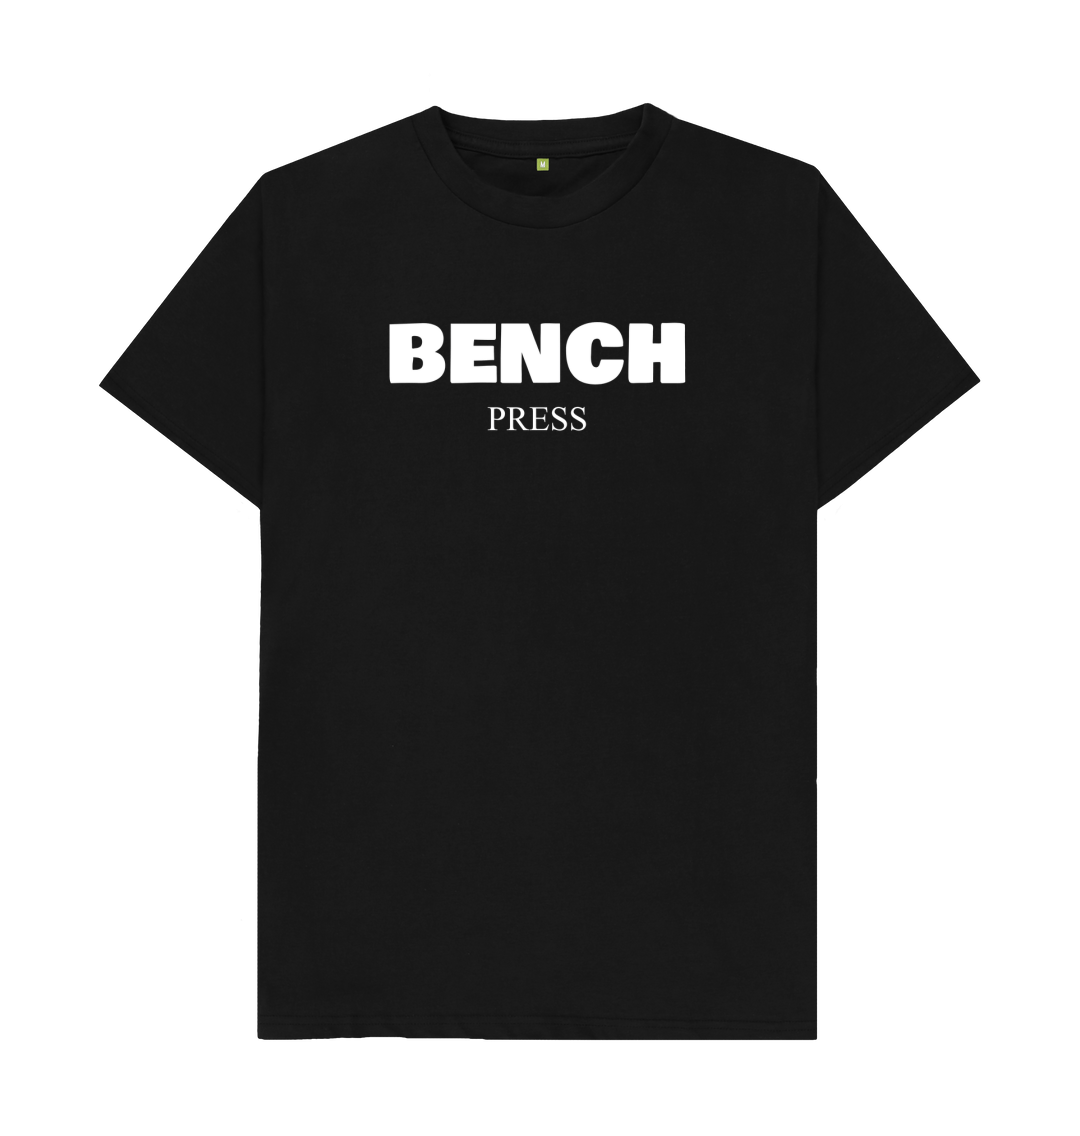 BENCH workout tshirt